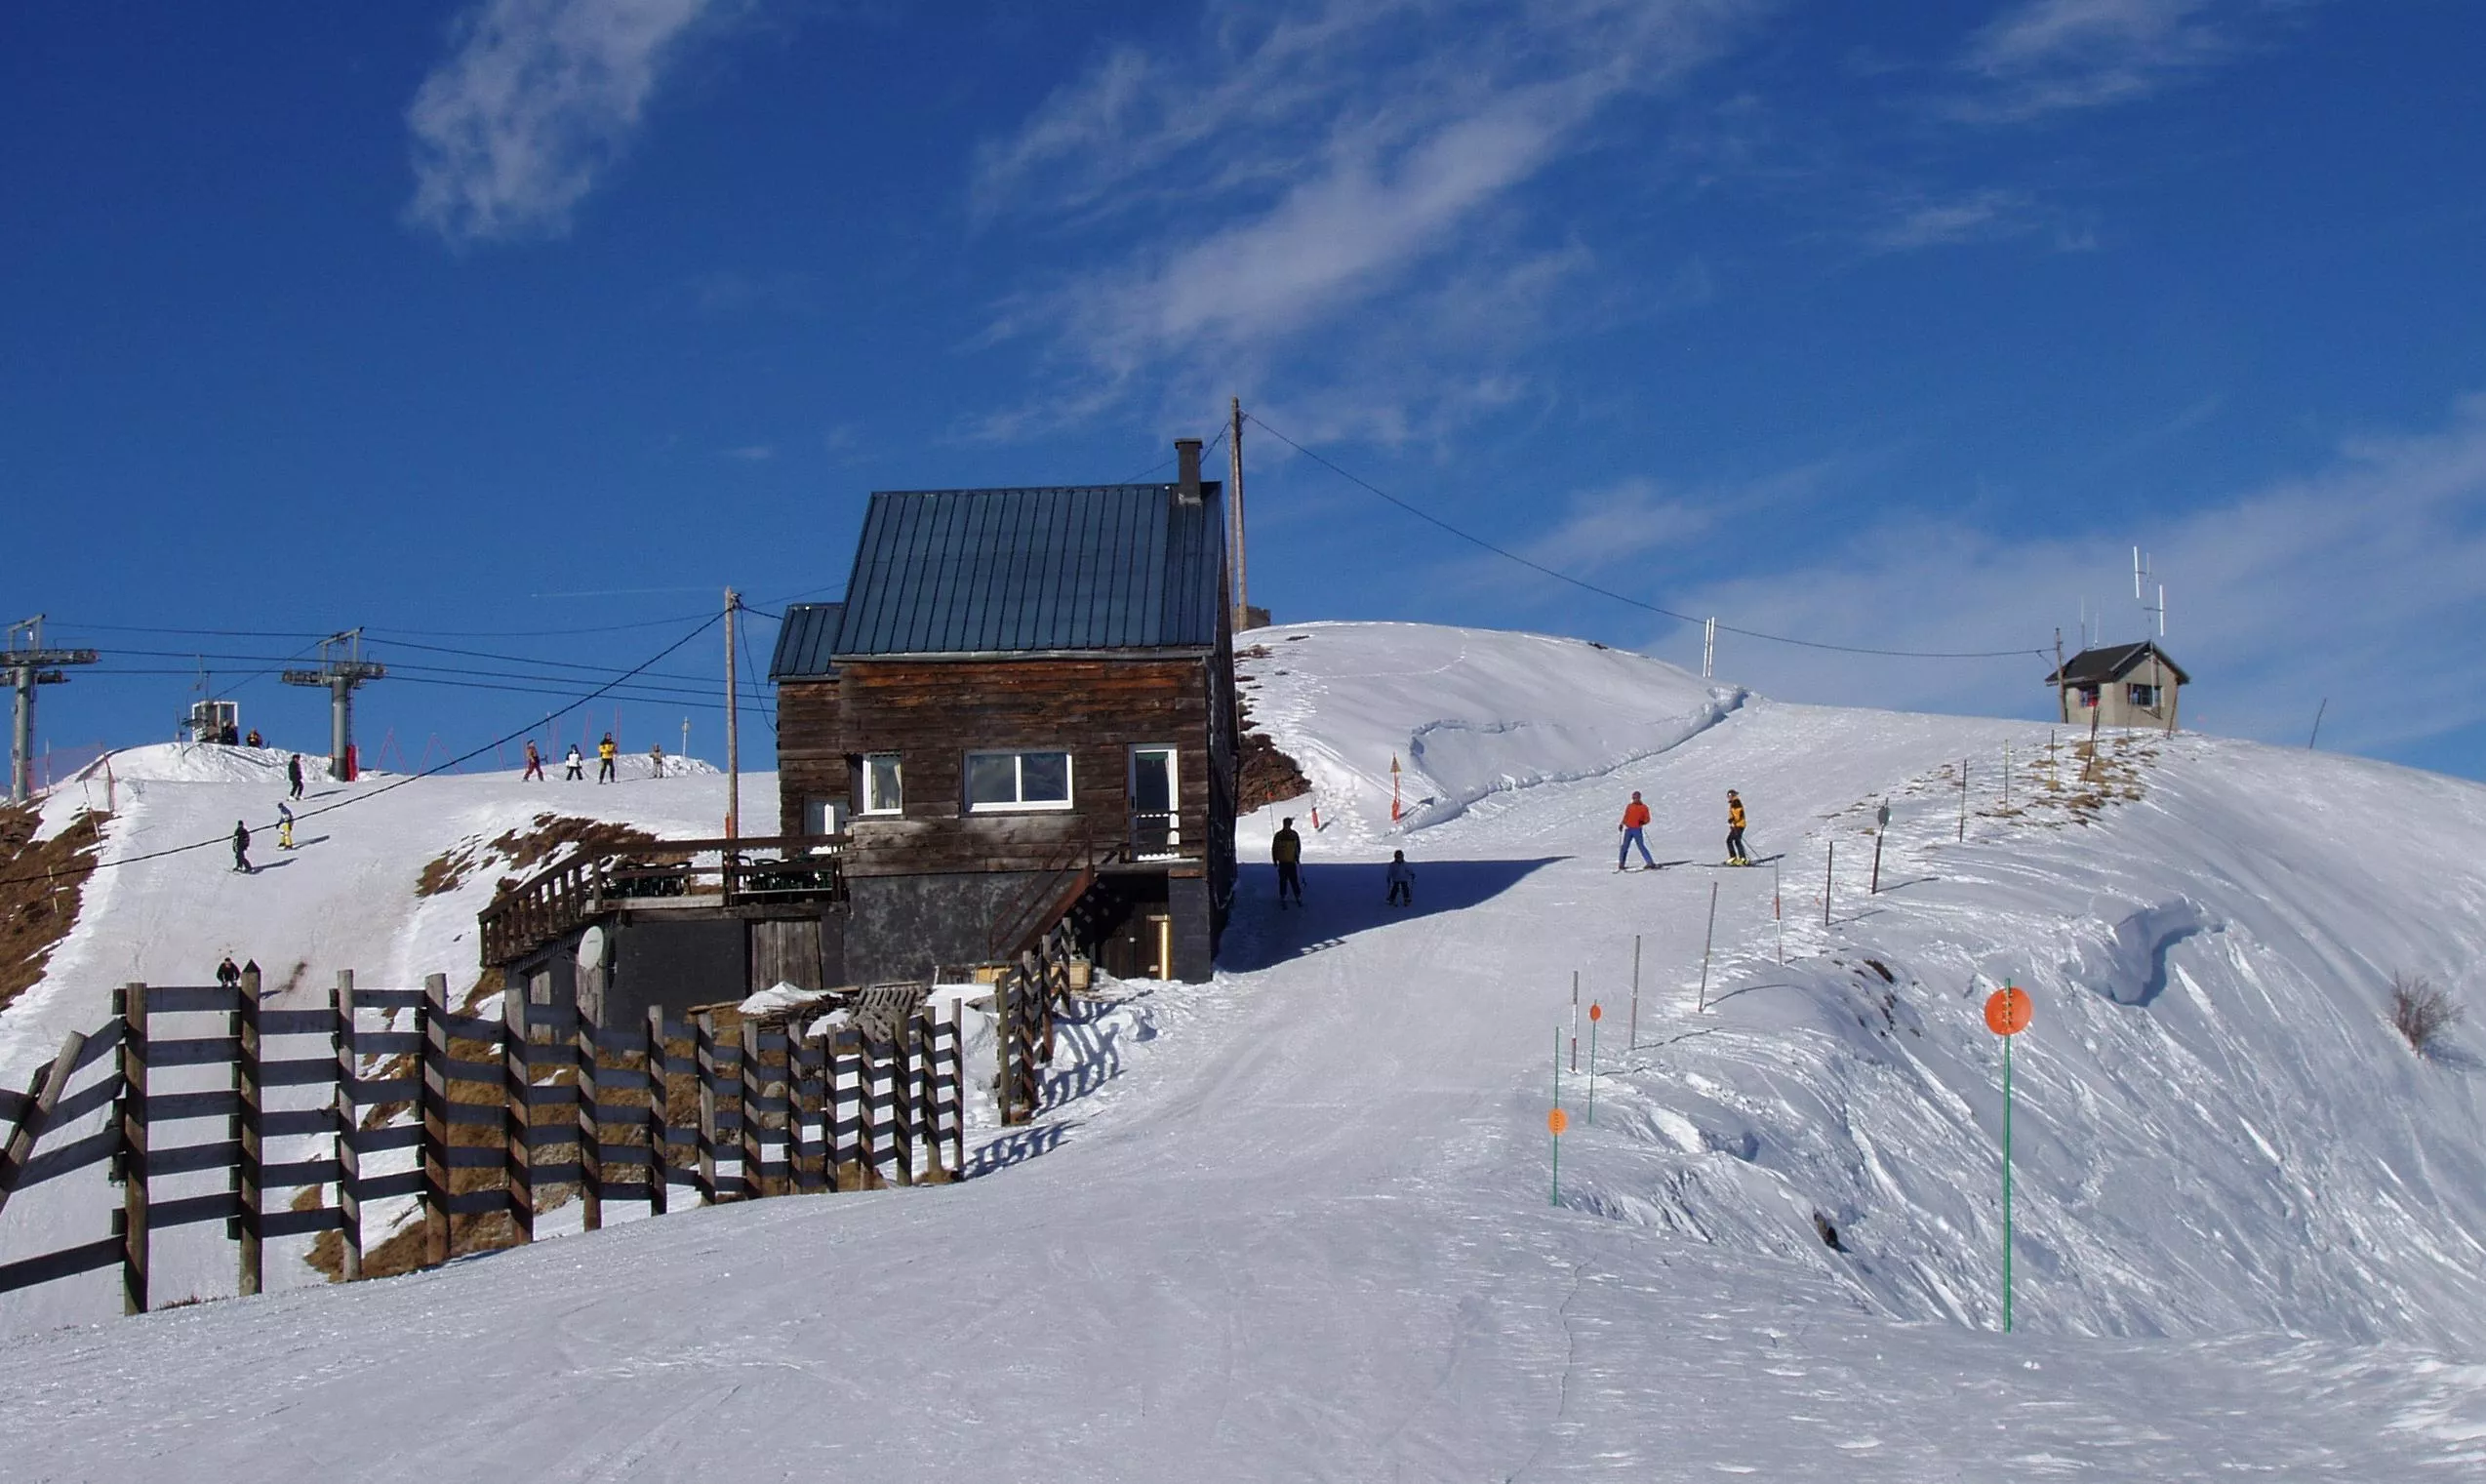 Estacion Santa Filomena in Mexico, North America | Snowboarding,Skiing - Rated 0.8